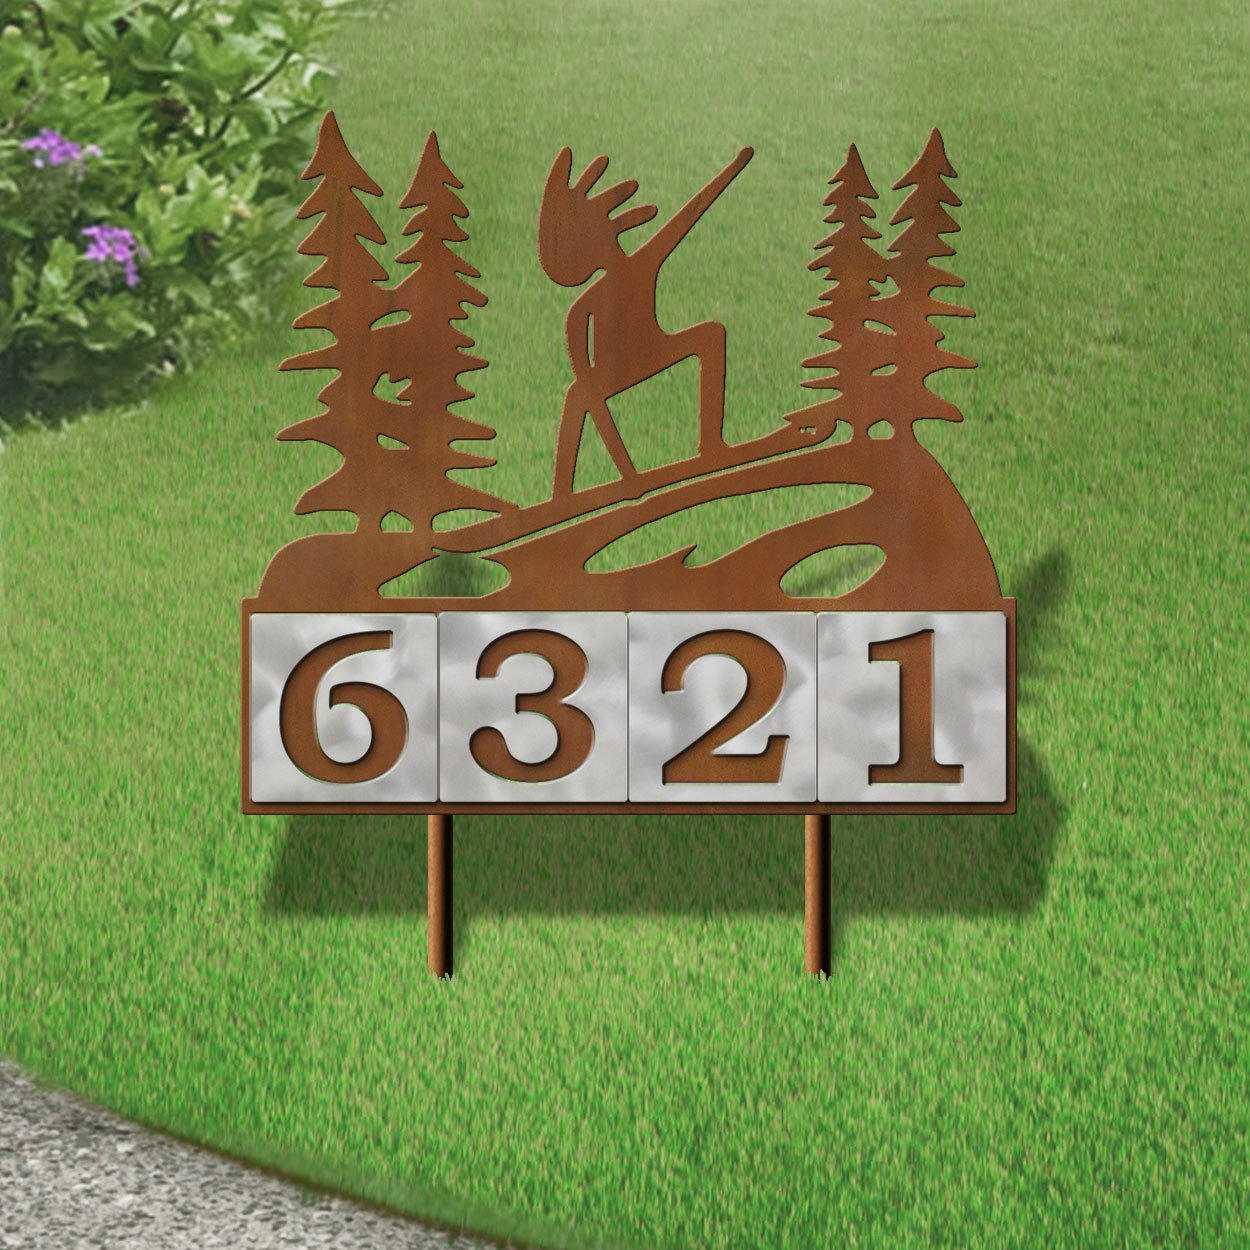 610174 - Shredding Kokopelli Design 4-Digit Horizontal 6-inch Tile Outdoor House Numbers Yard Sign